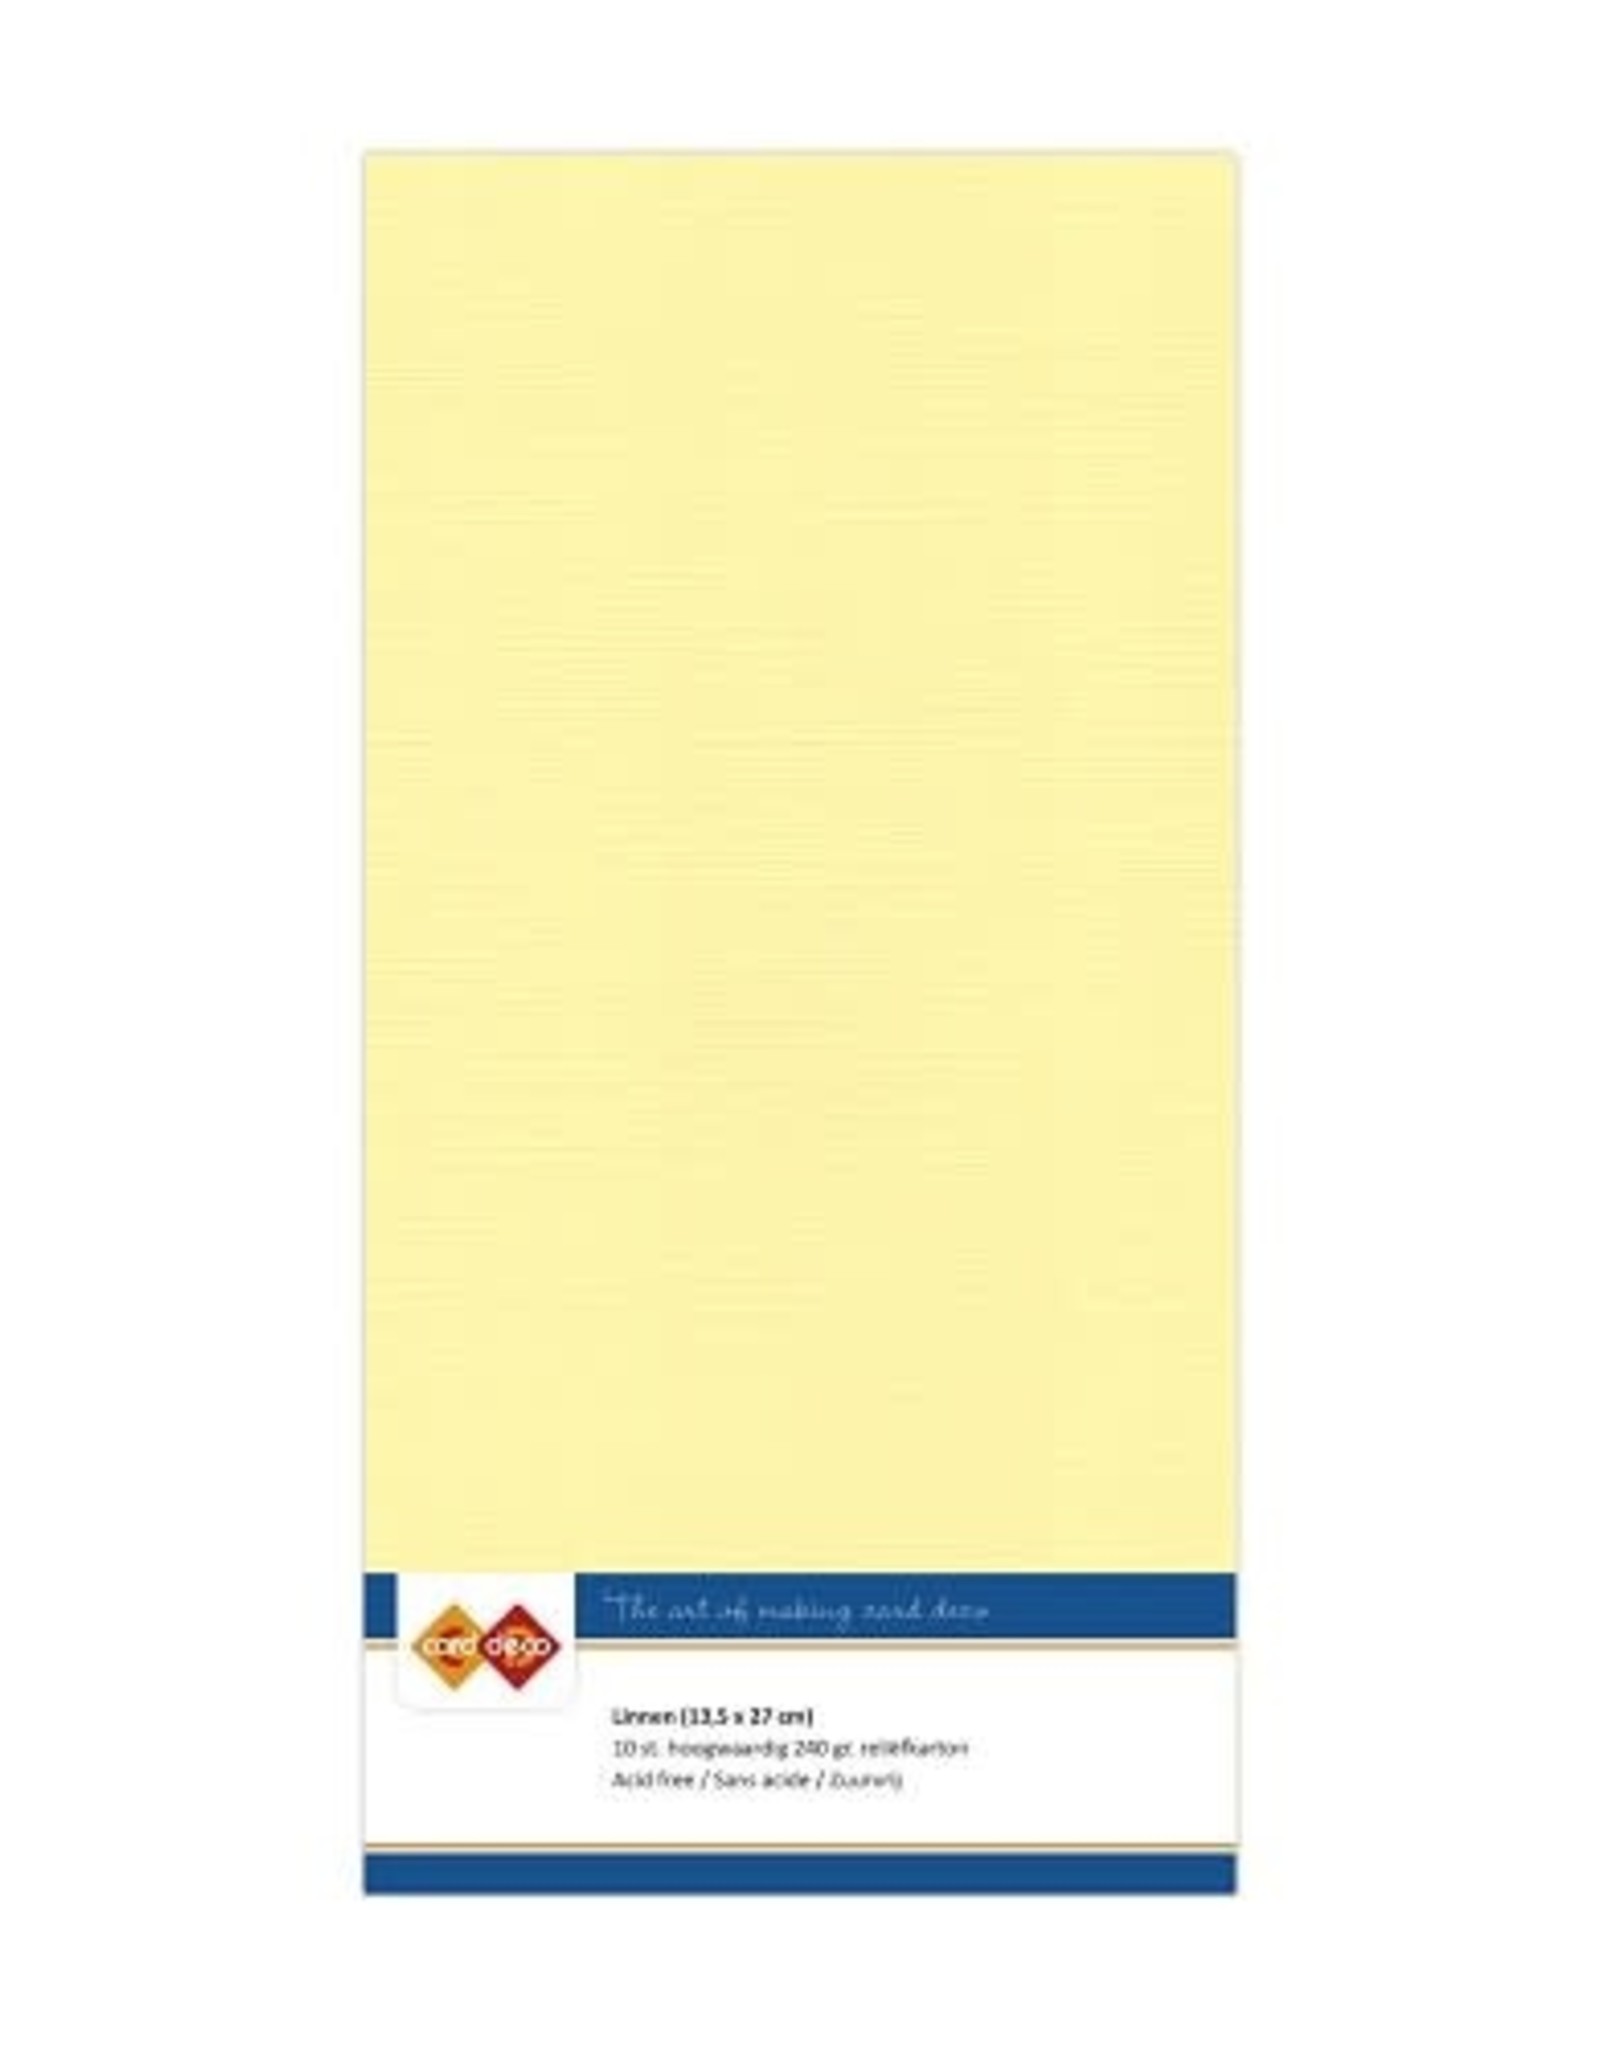 Card Deco Card Deco Linnenkarton - Vierkant - Lichtgeel  LKK-4K03  13.5 x 27 cm  10 stuks